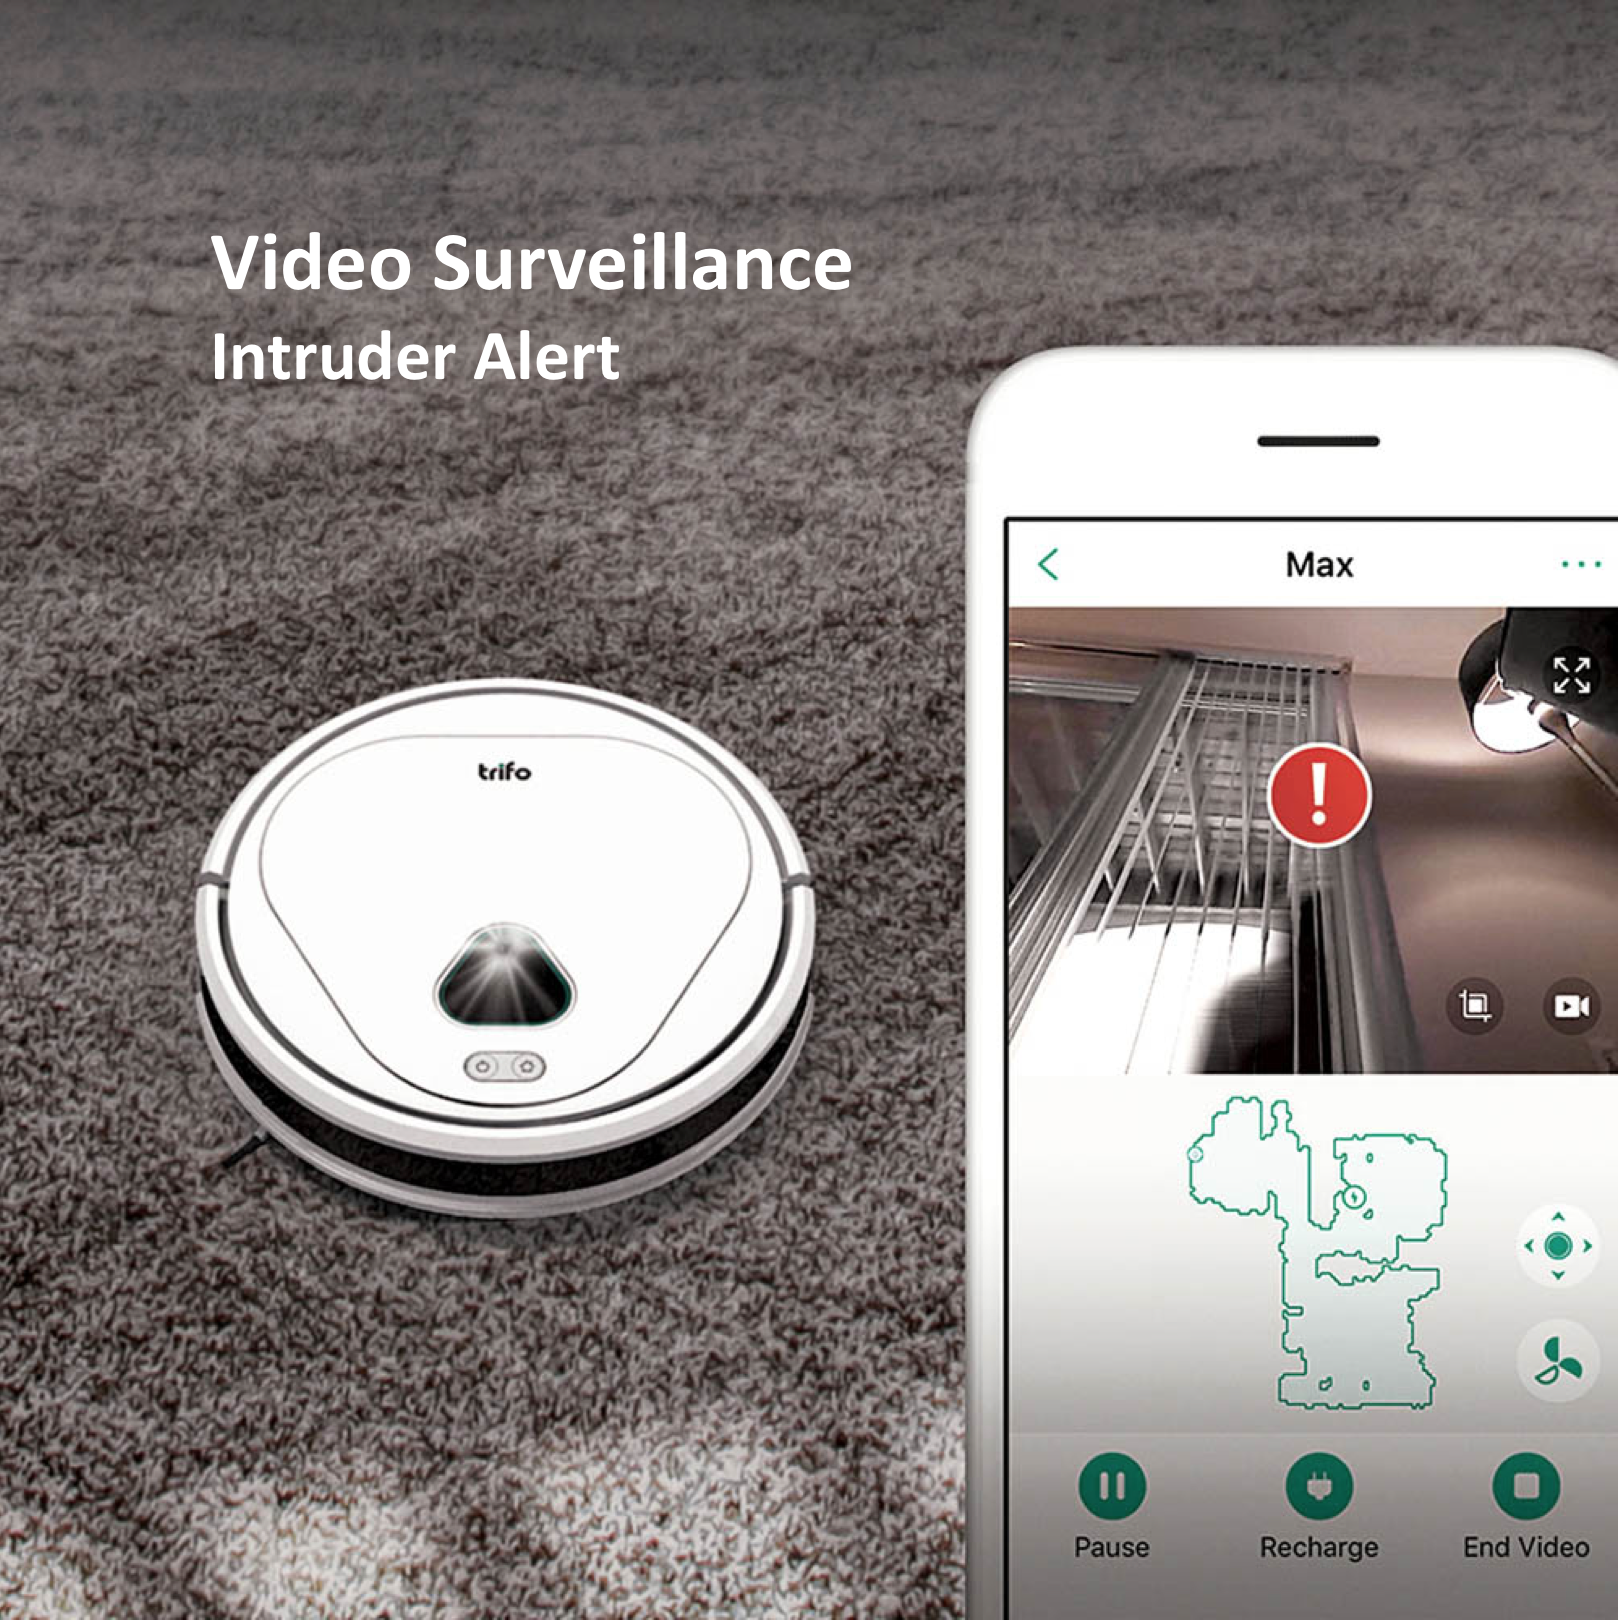 Trifo Max Home Surveillance Robot Vacuum - image 3 of 5